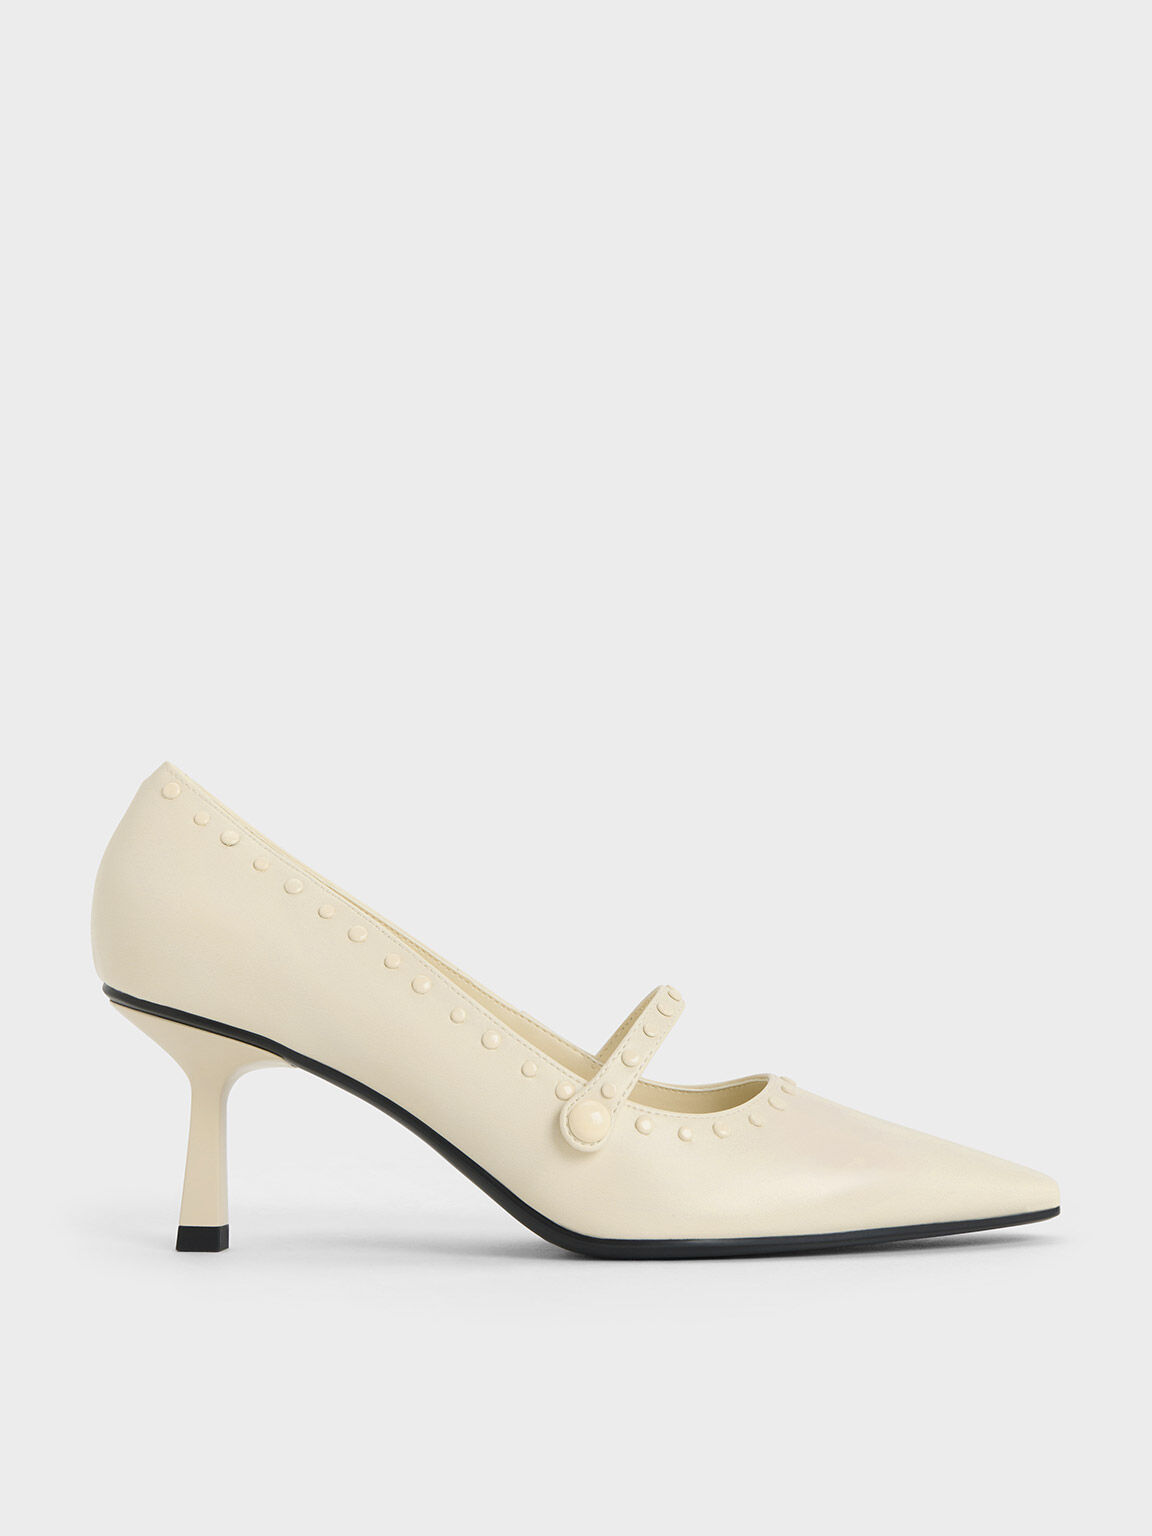 Paul Green Classic heels - offwhite/off-white - Zalando.de